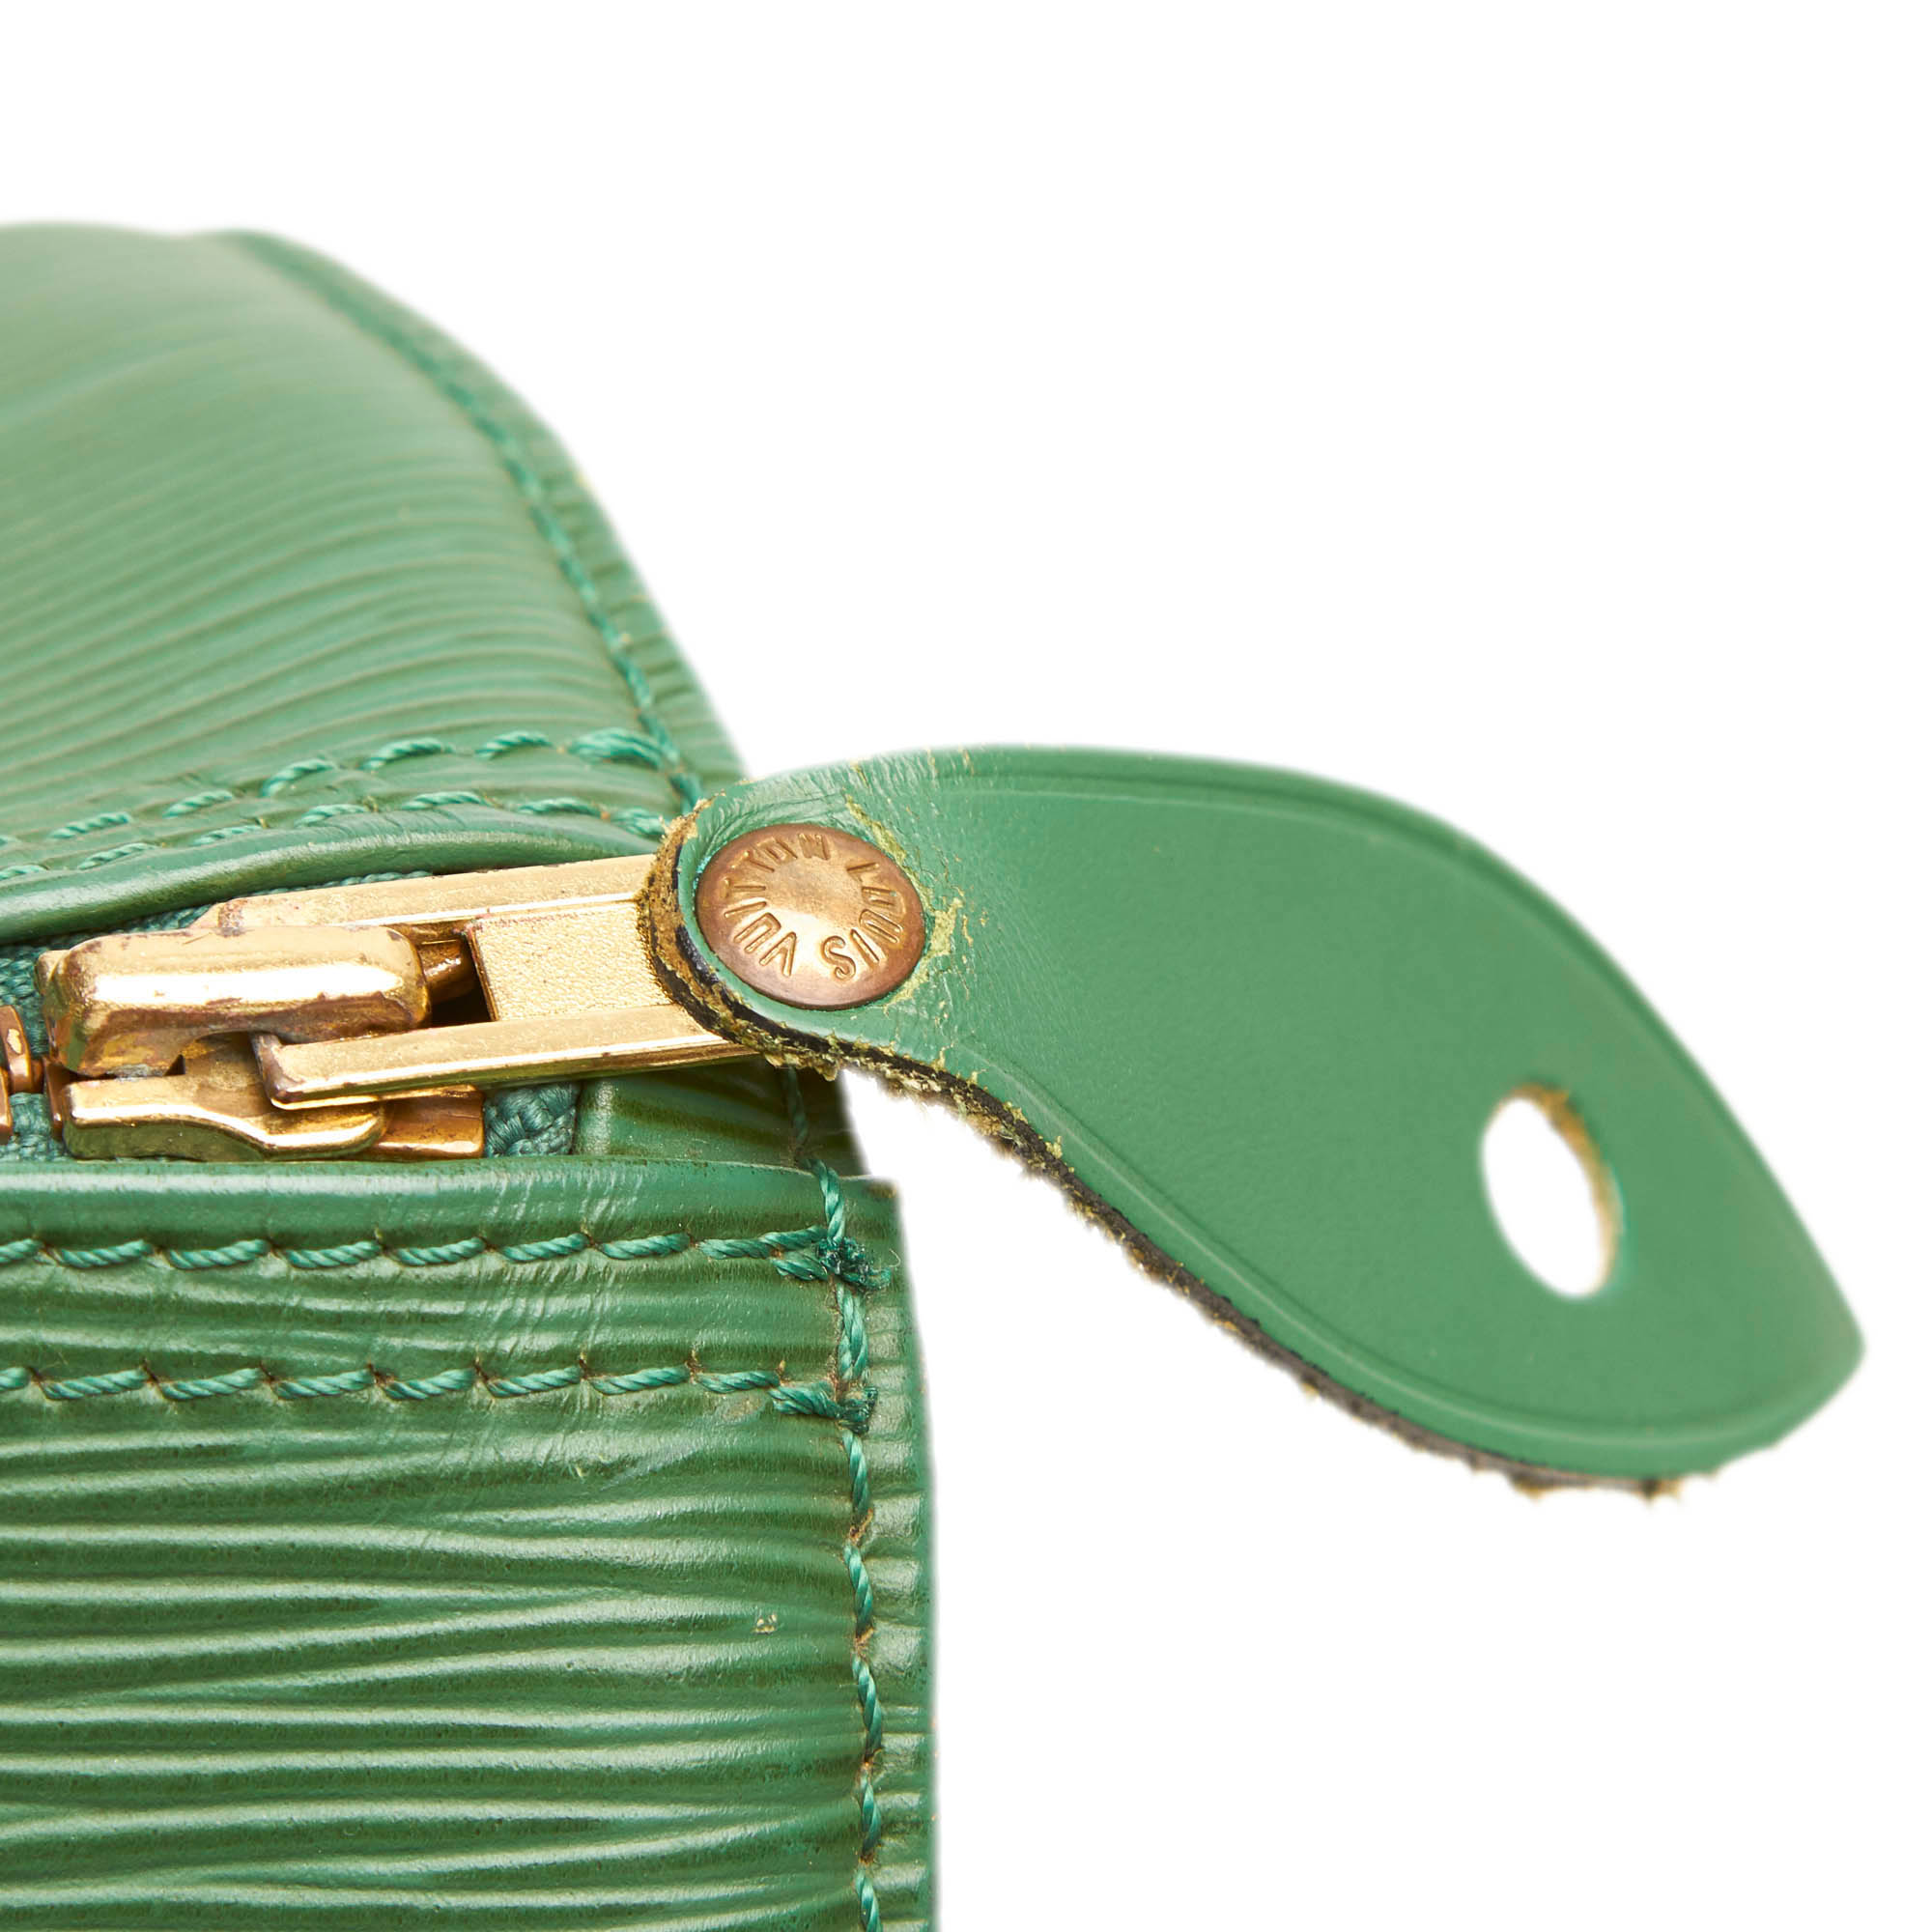 Pre-Loved Louis Vuitton Green Epi Leather Speedy 30 France | eBay